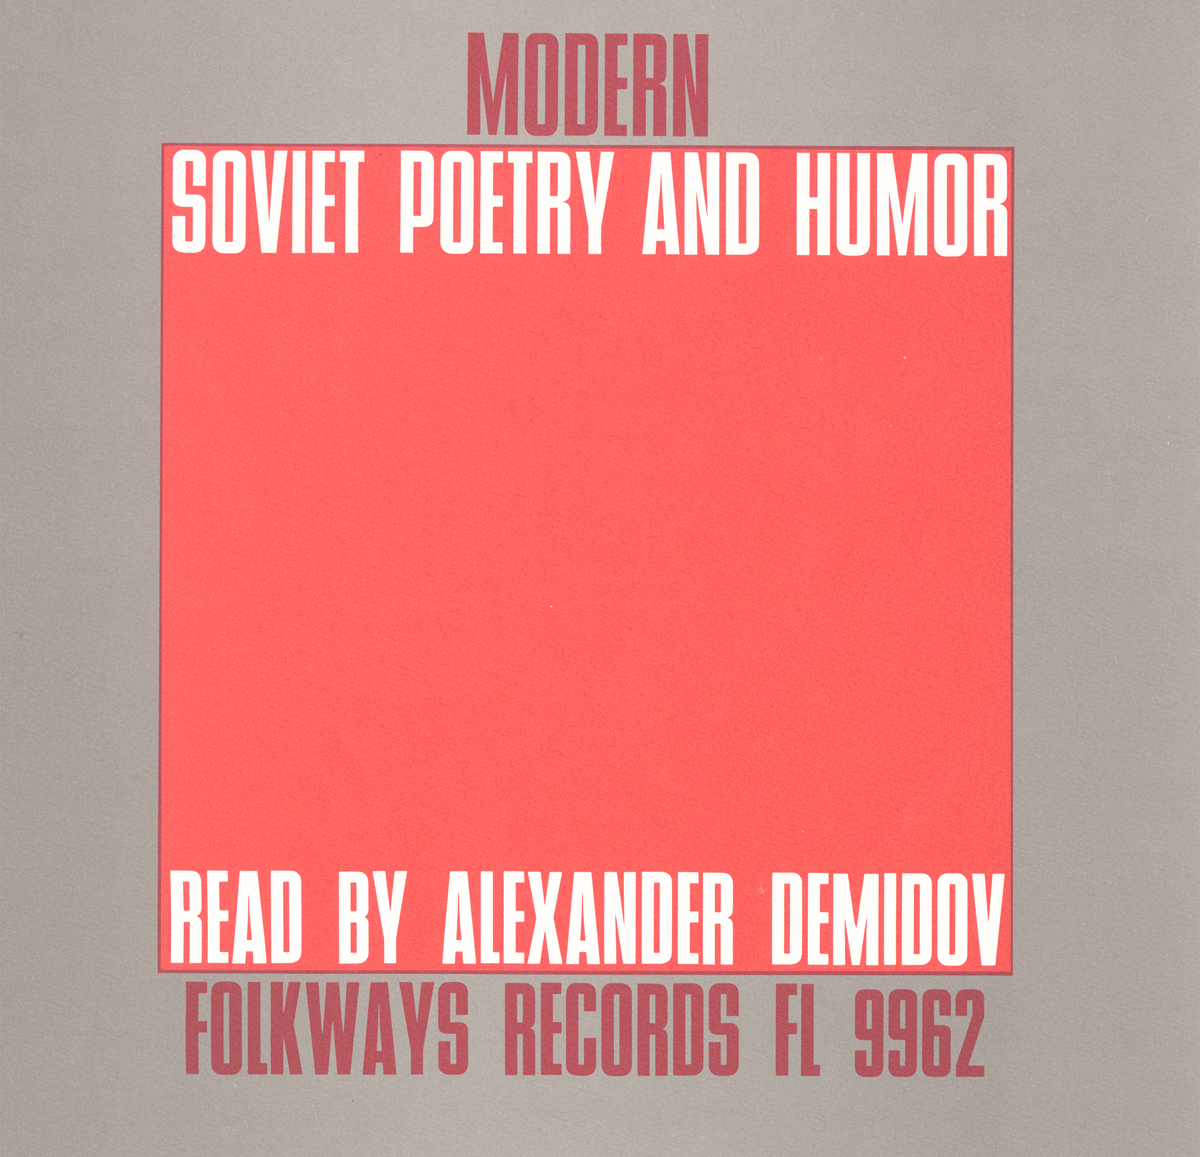 MODERN SOVIET POETRY AND HUMOR